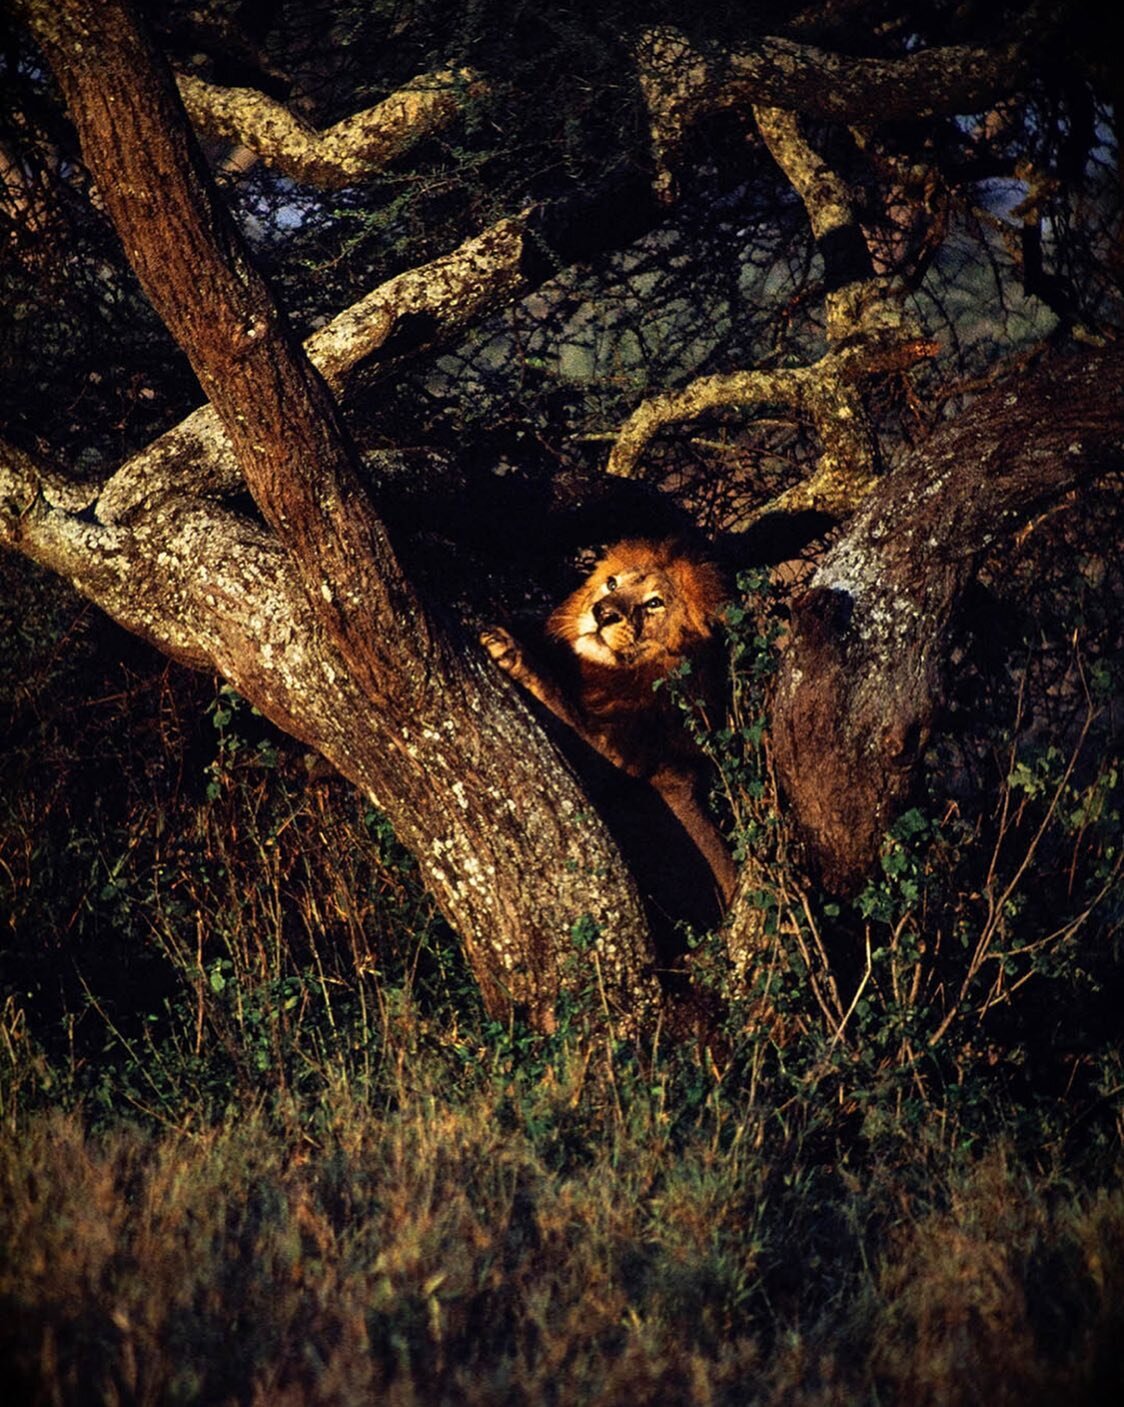 Lion, Serengeti, 1997. ⁠
⁠
⁠
#lion #serengeti #wildlife #nature #animal #africa #safari #tanzania #kodachrome #fromthearchive #jwbild